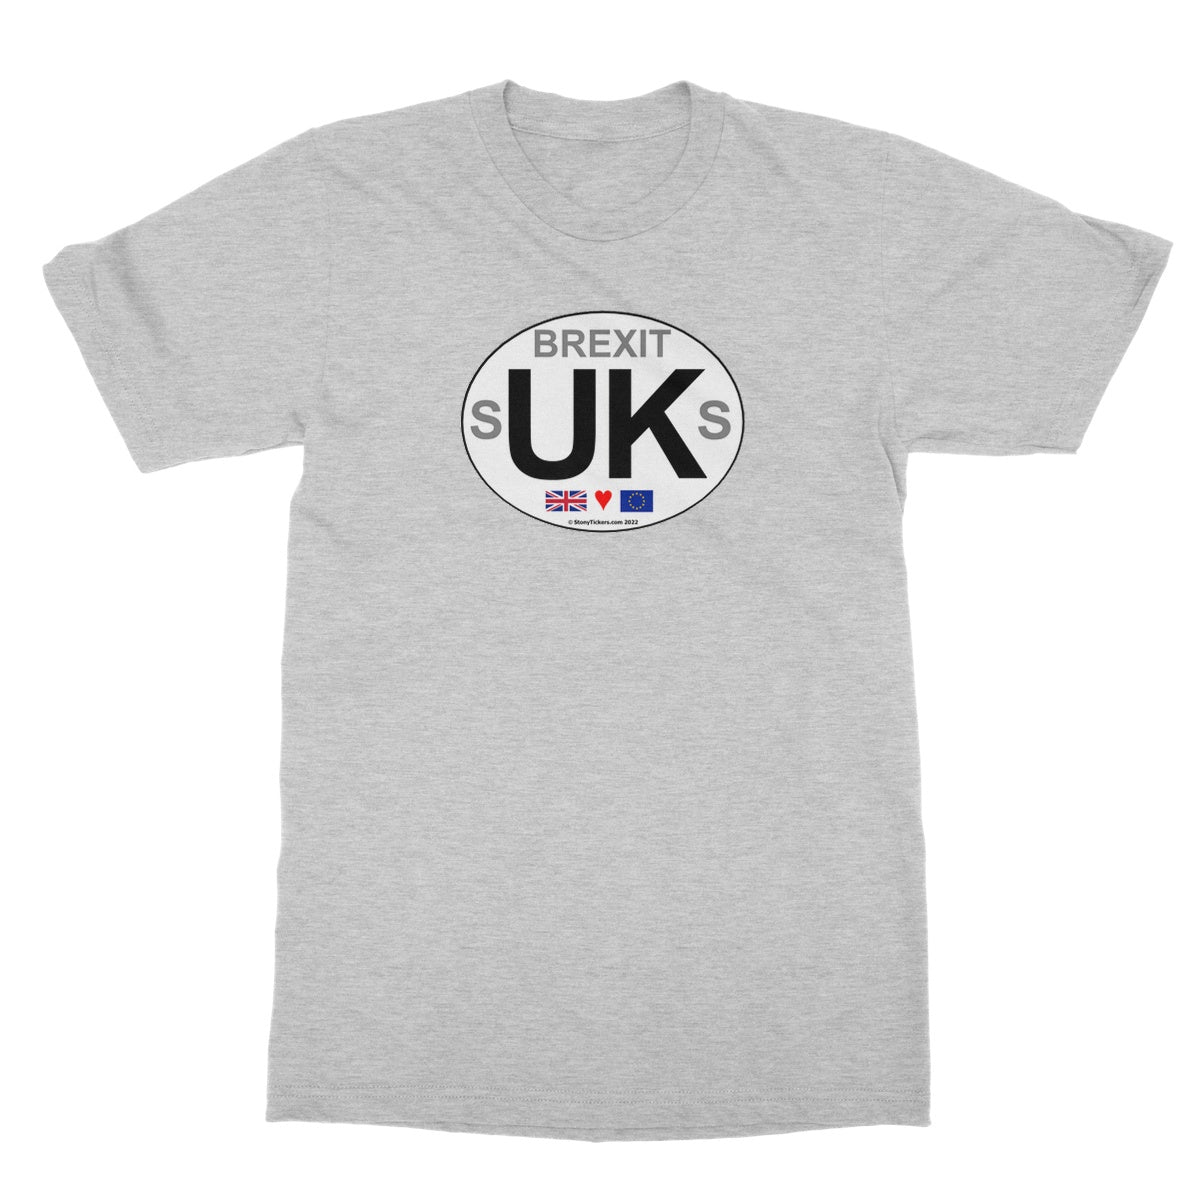 Brexit sUKs Softstyle T-Shirt